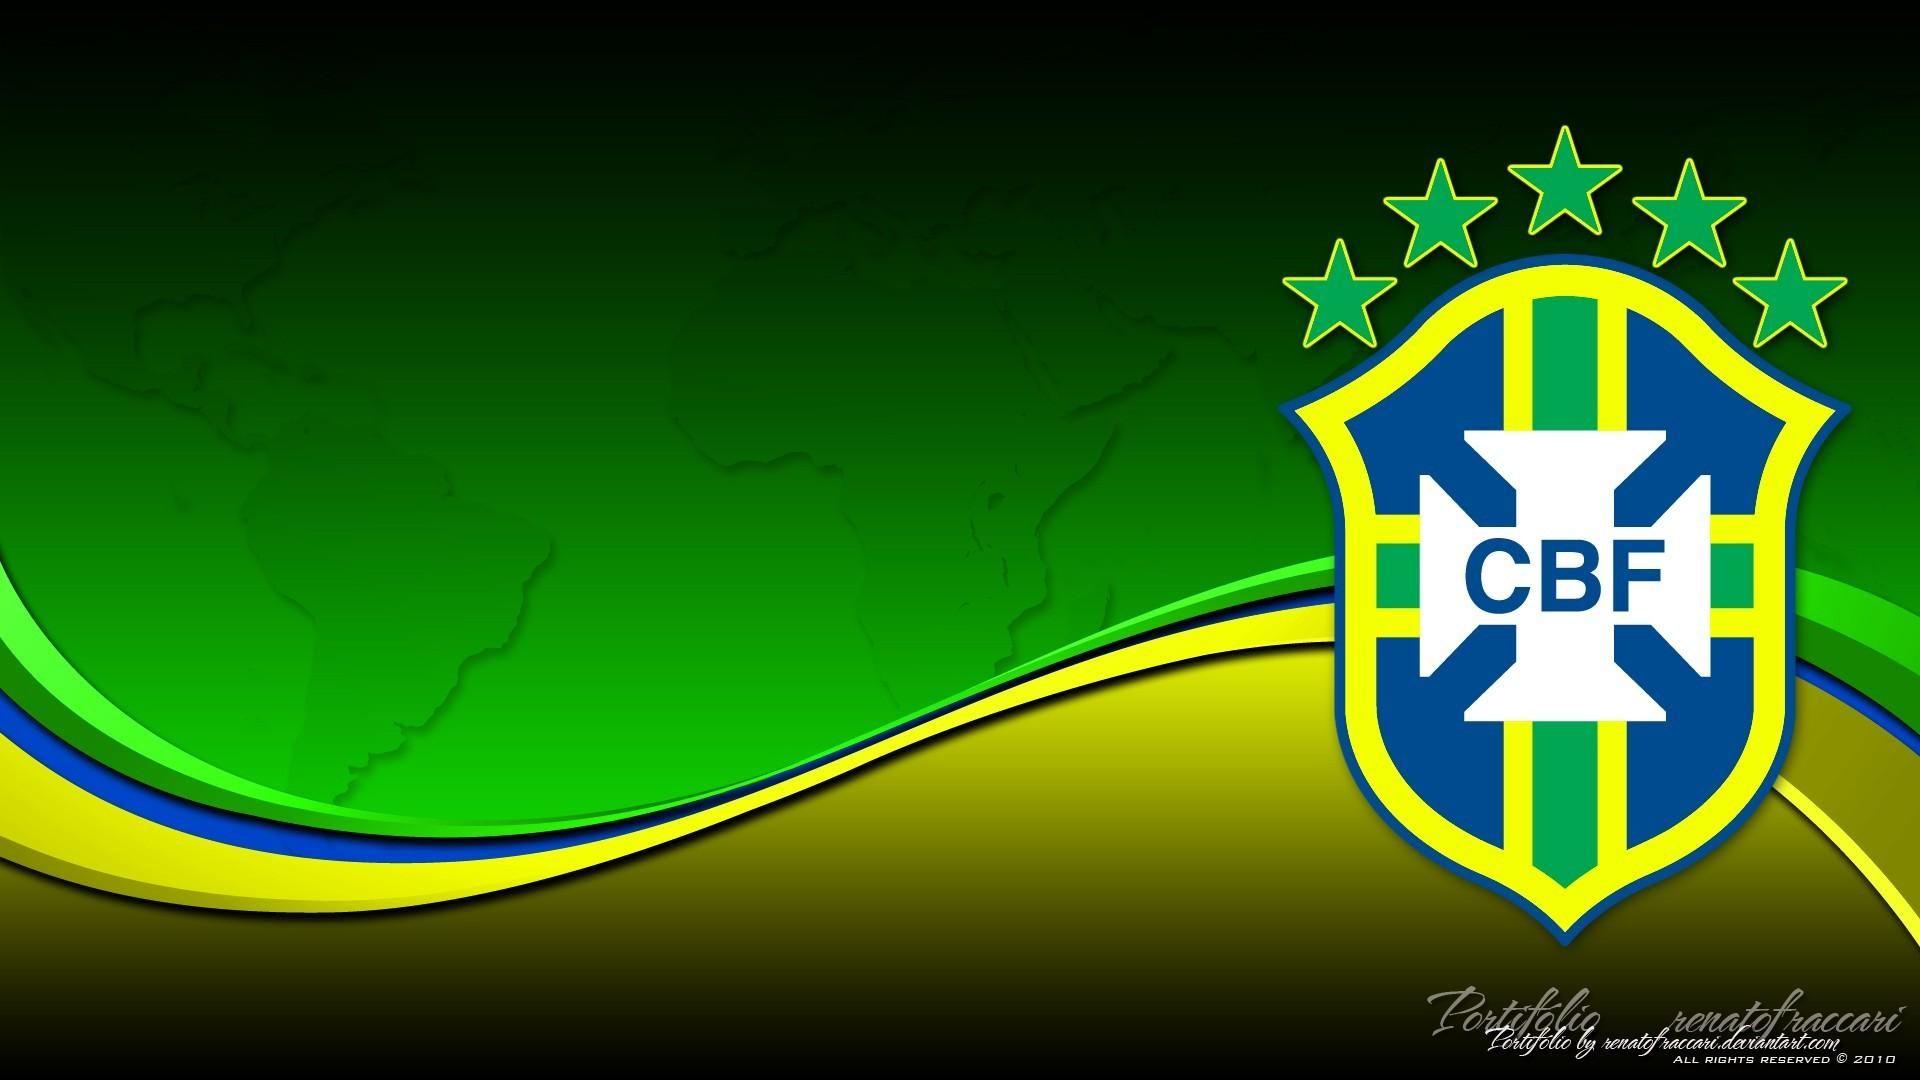 Brazil logos fussball colors futbol futebol cbf wallpaper